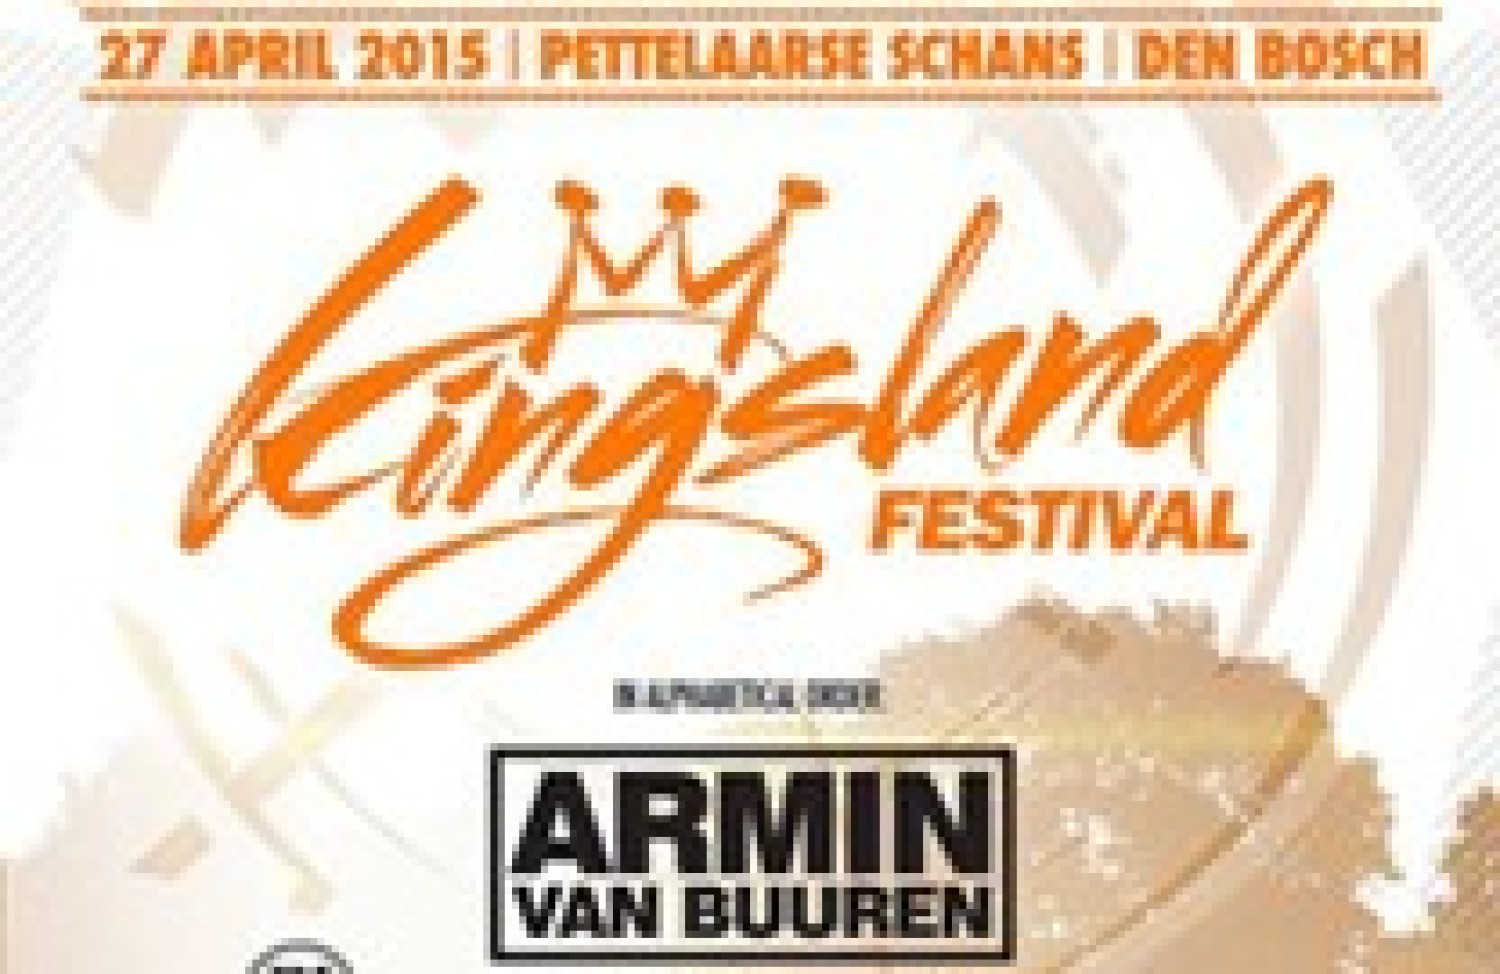 Party report: Kingsland Festival, Den Bosch (27-04-2015)